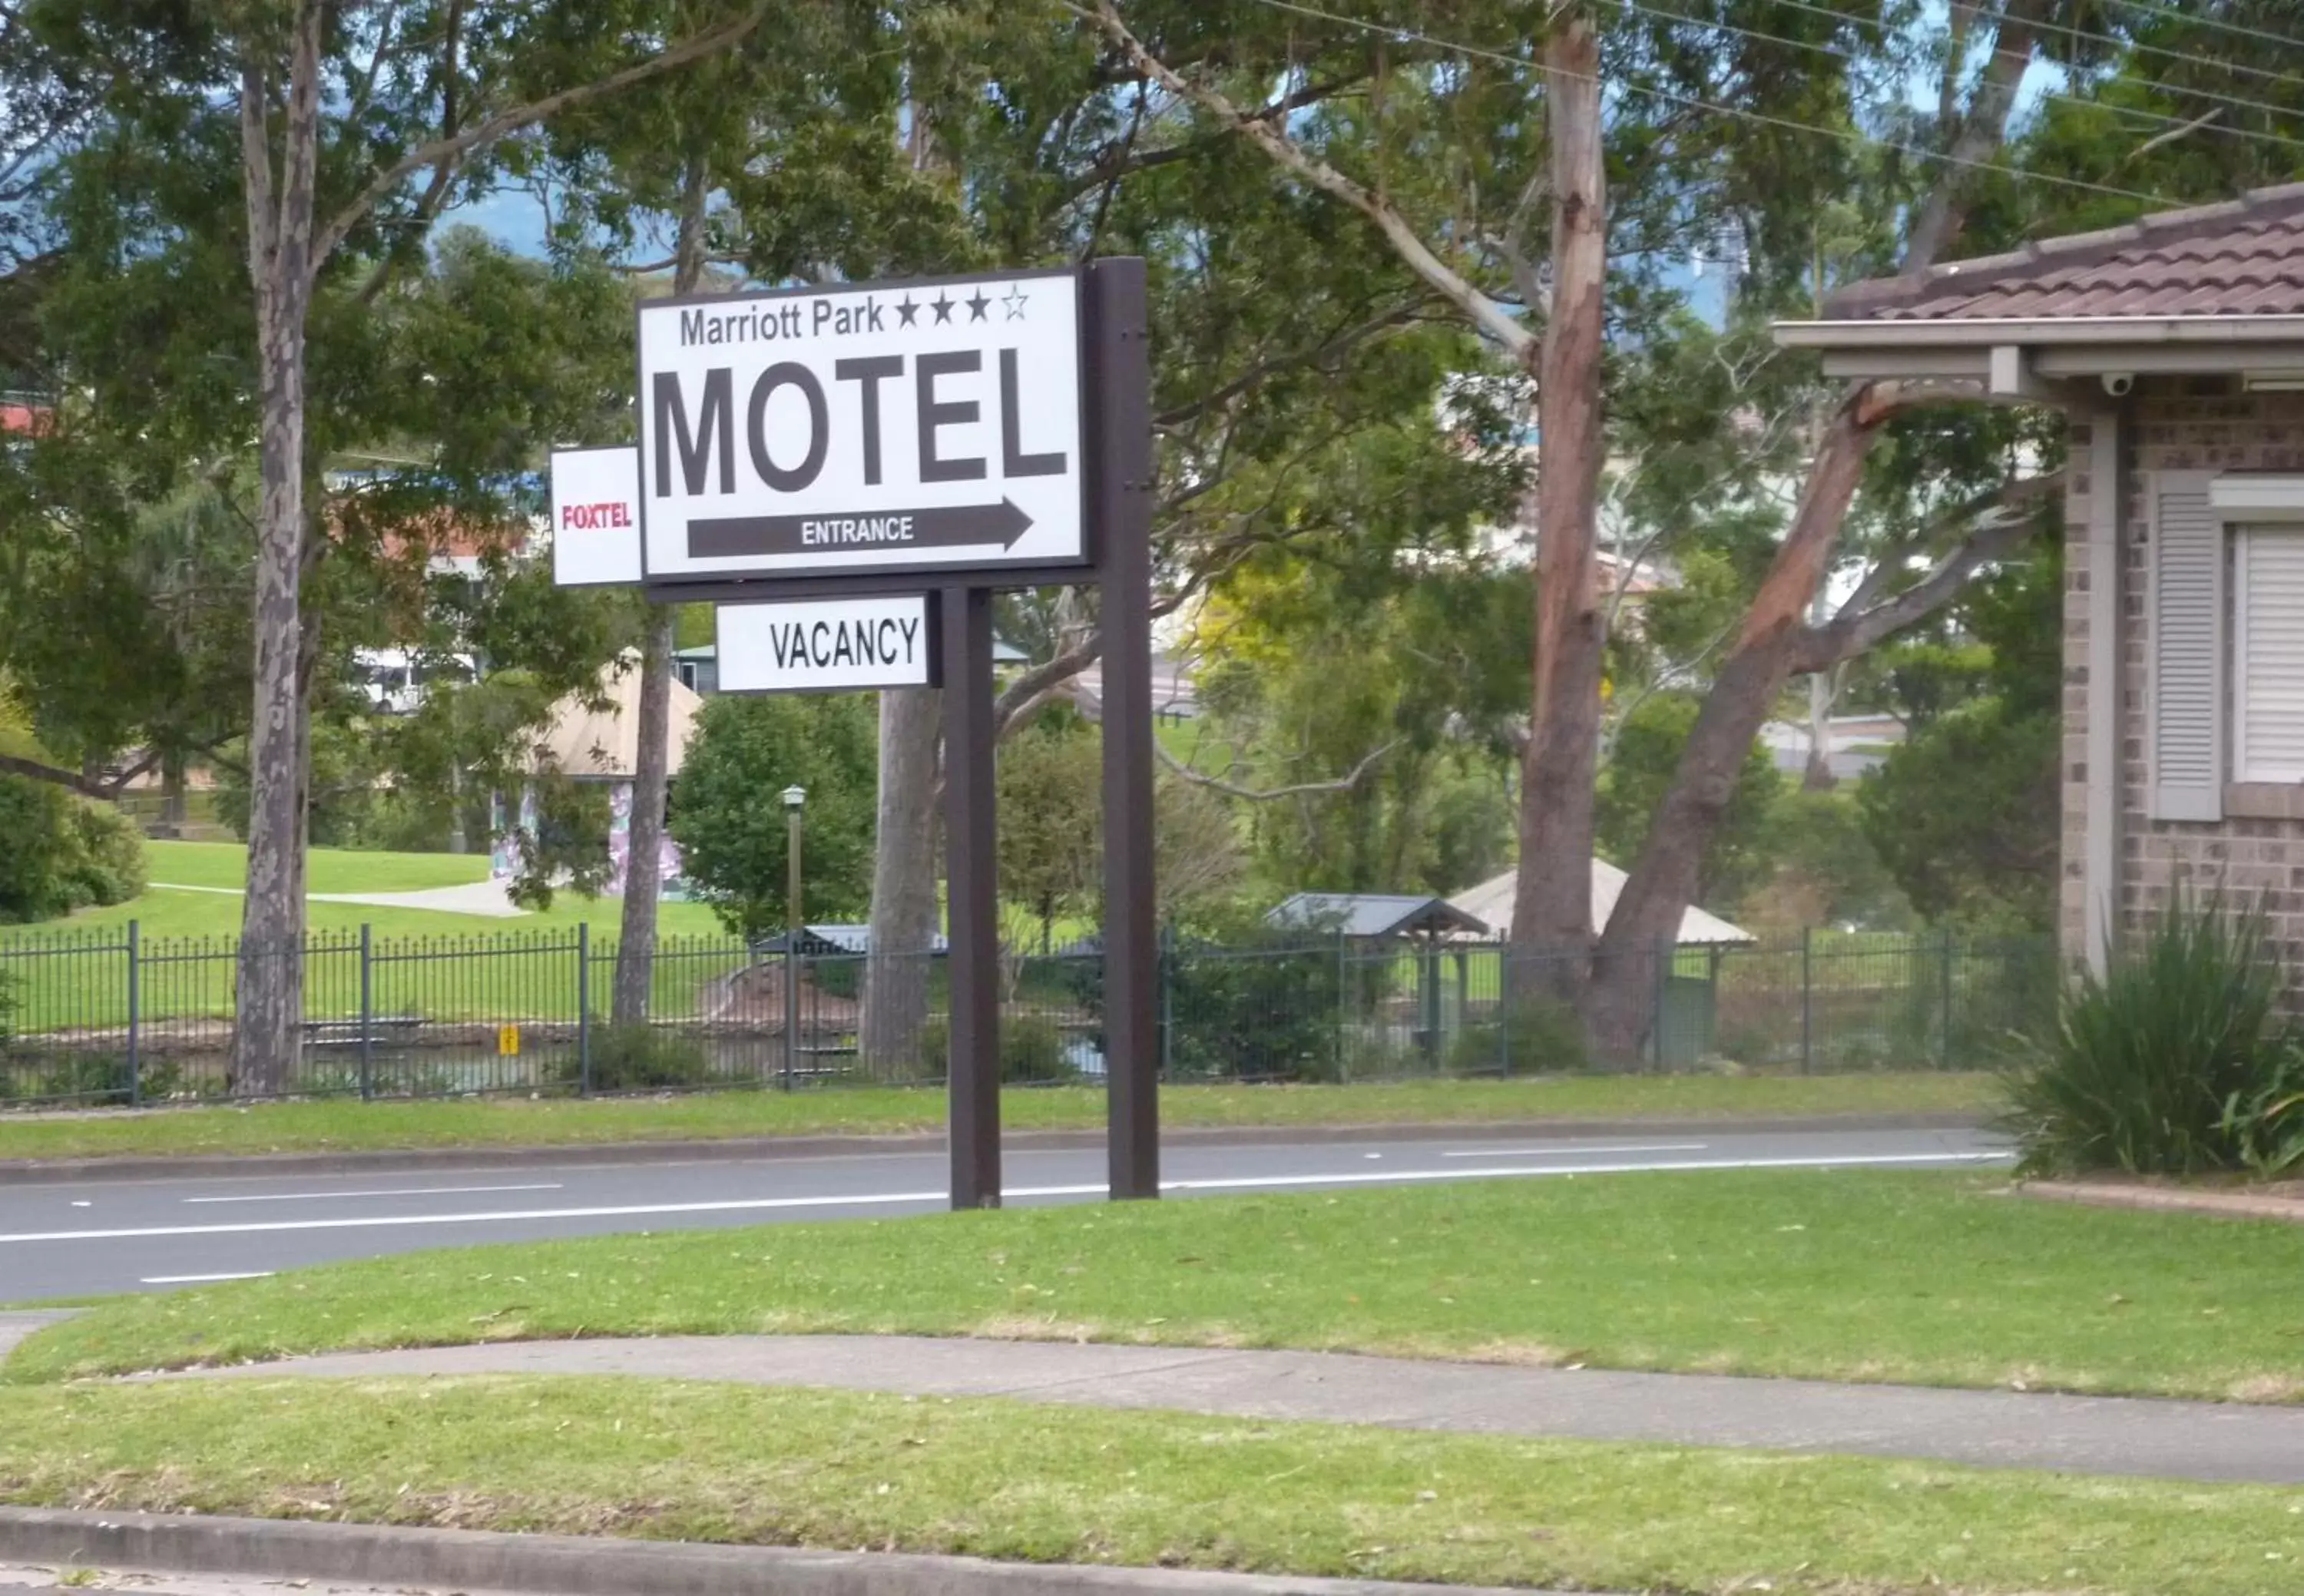 Property logo or sign in Marriott Park Motel